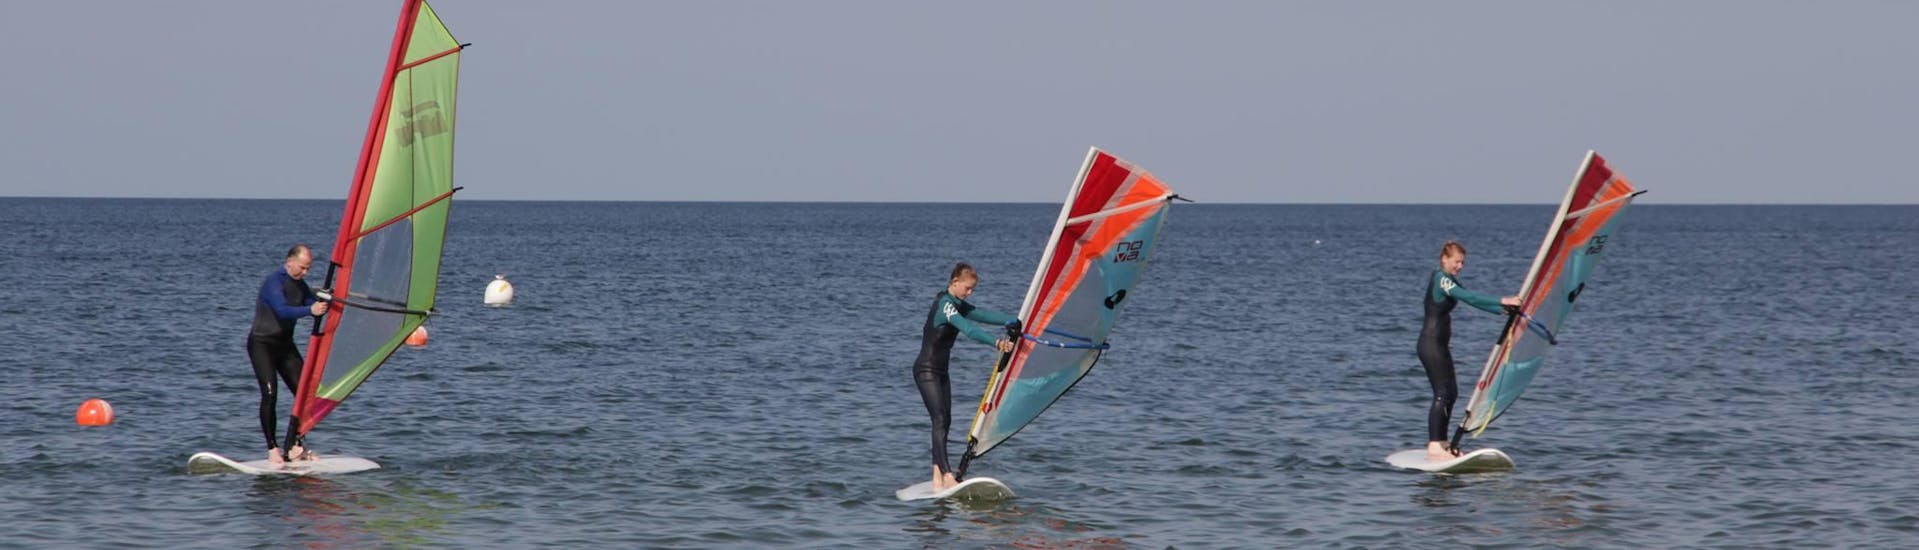 Windsurfing Trial Lessons for Beginners - Binz with Wassersport Binz - Hero image